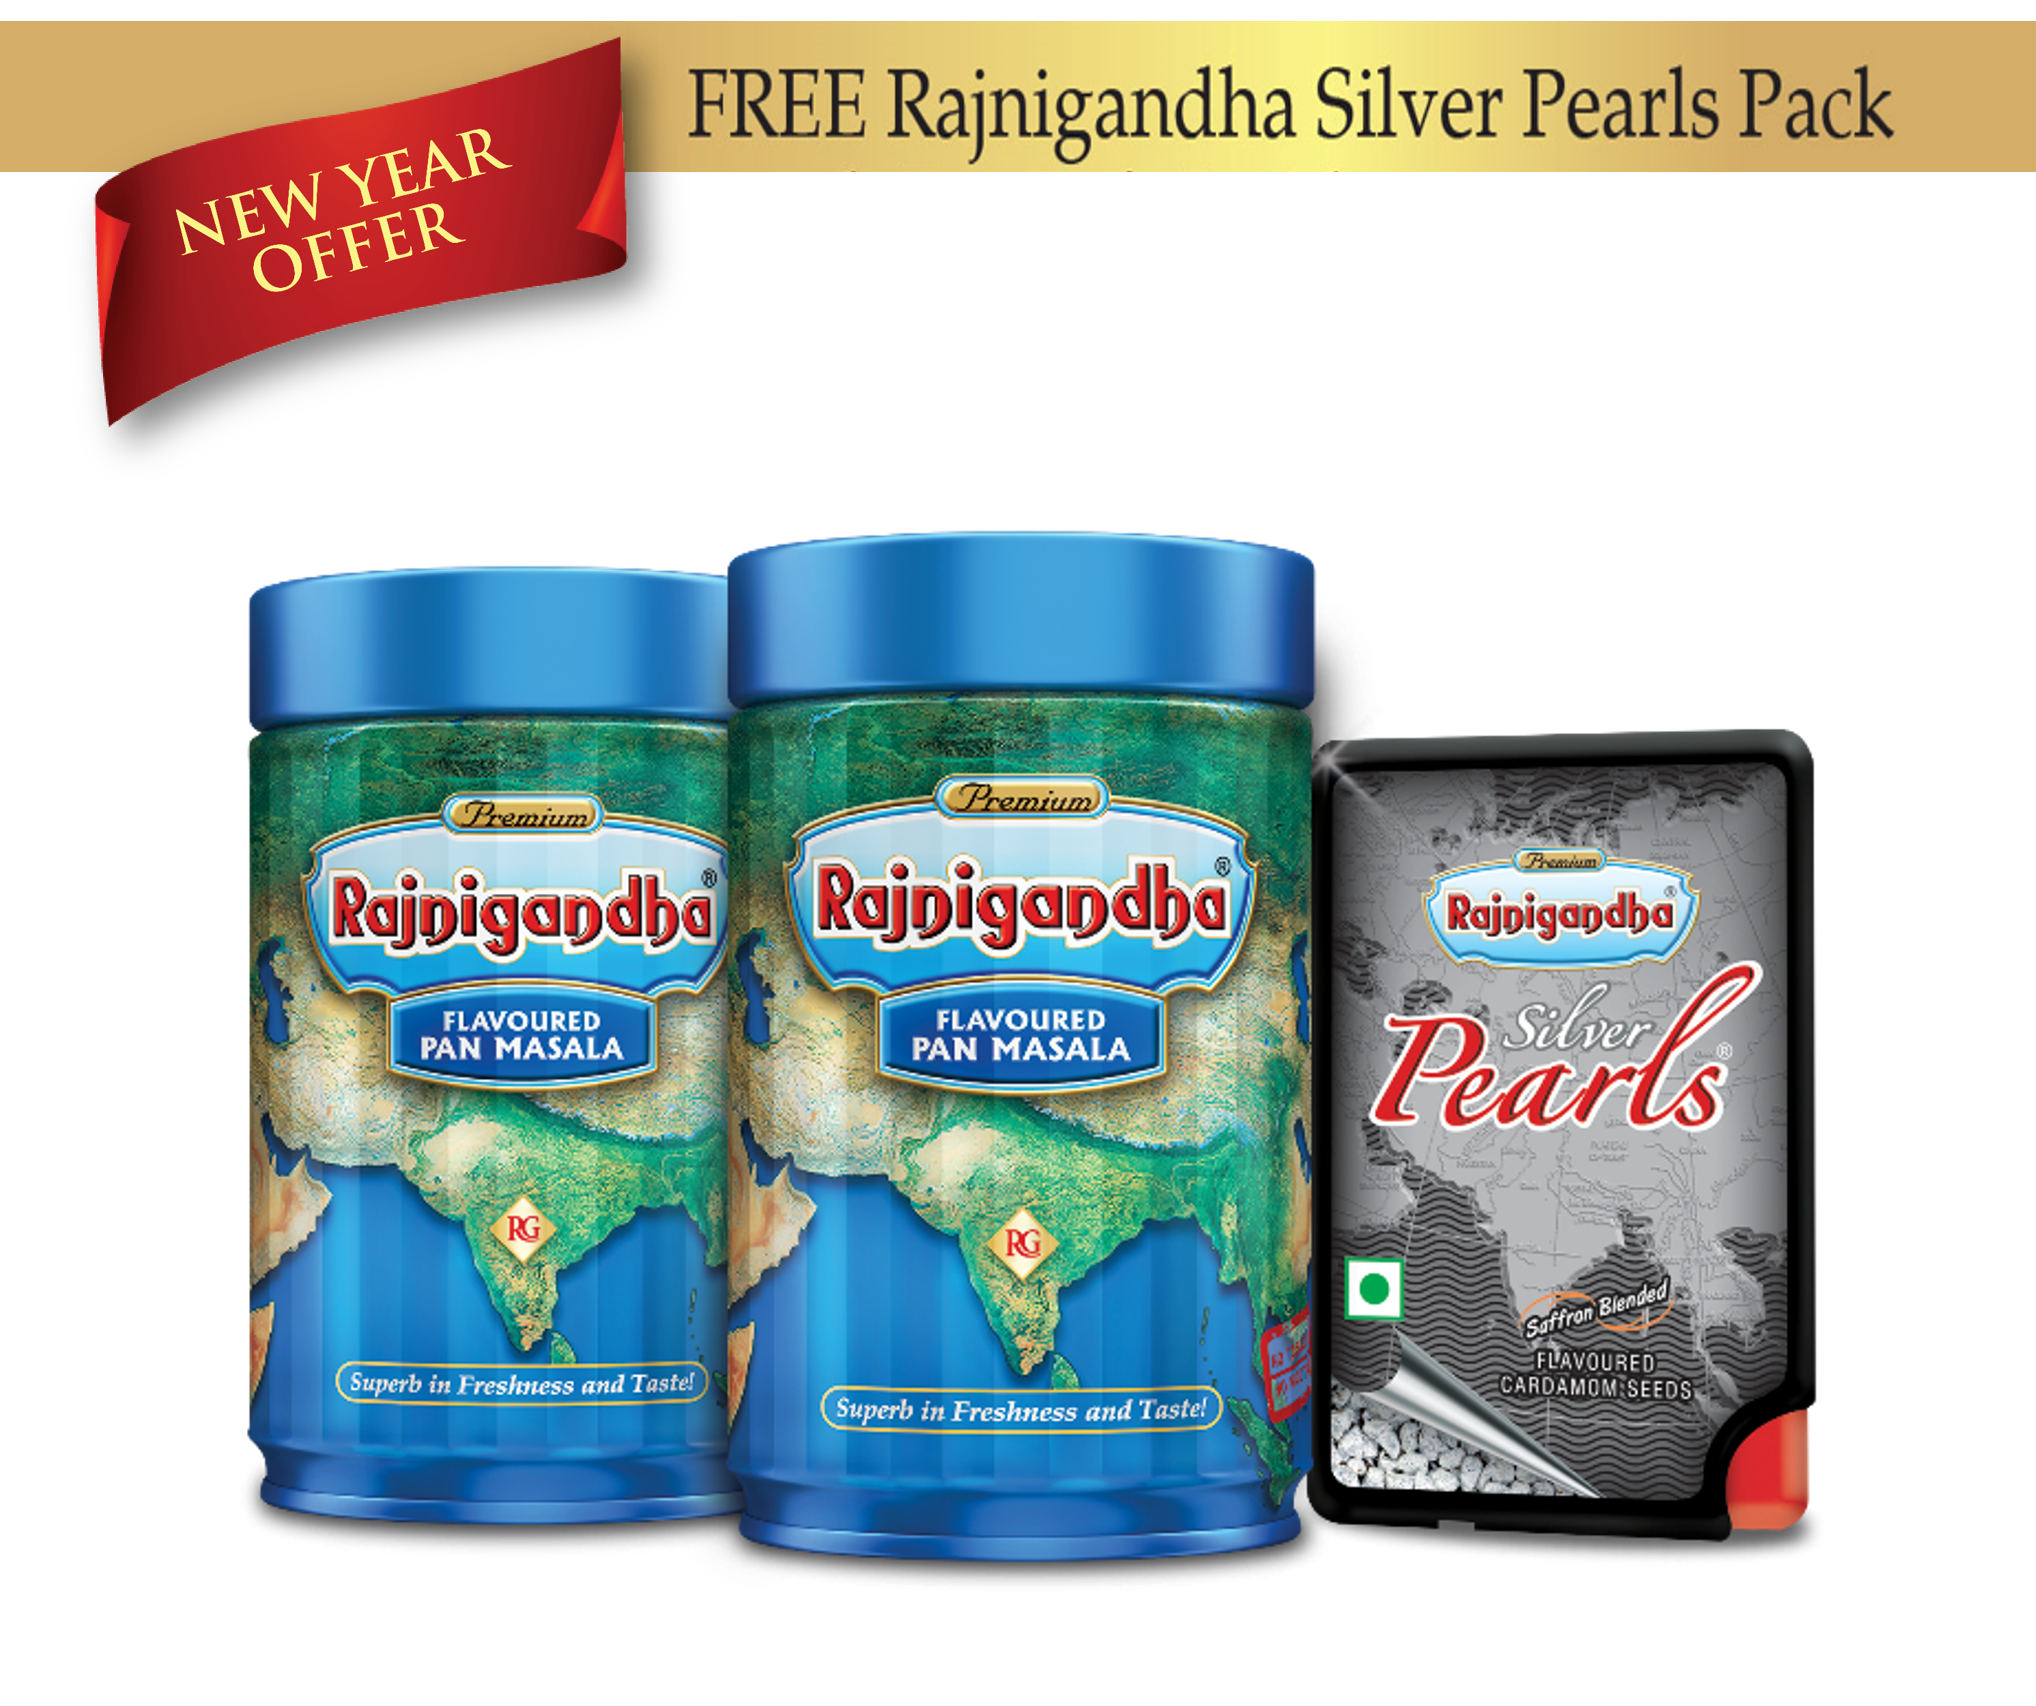 Rajnigandha ₹320.00 Pack